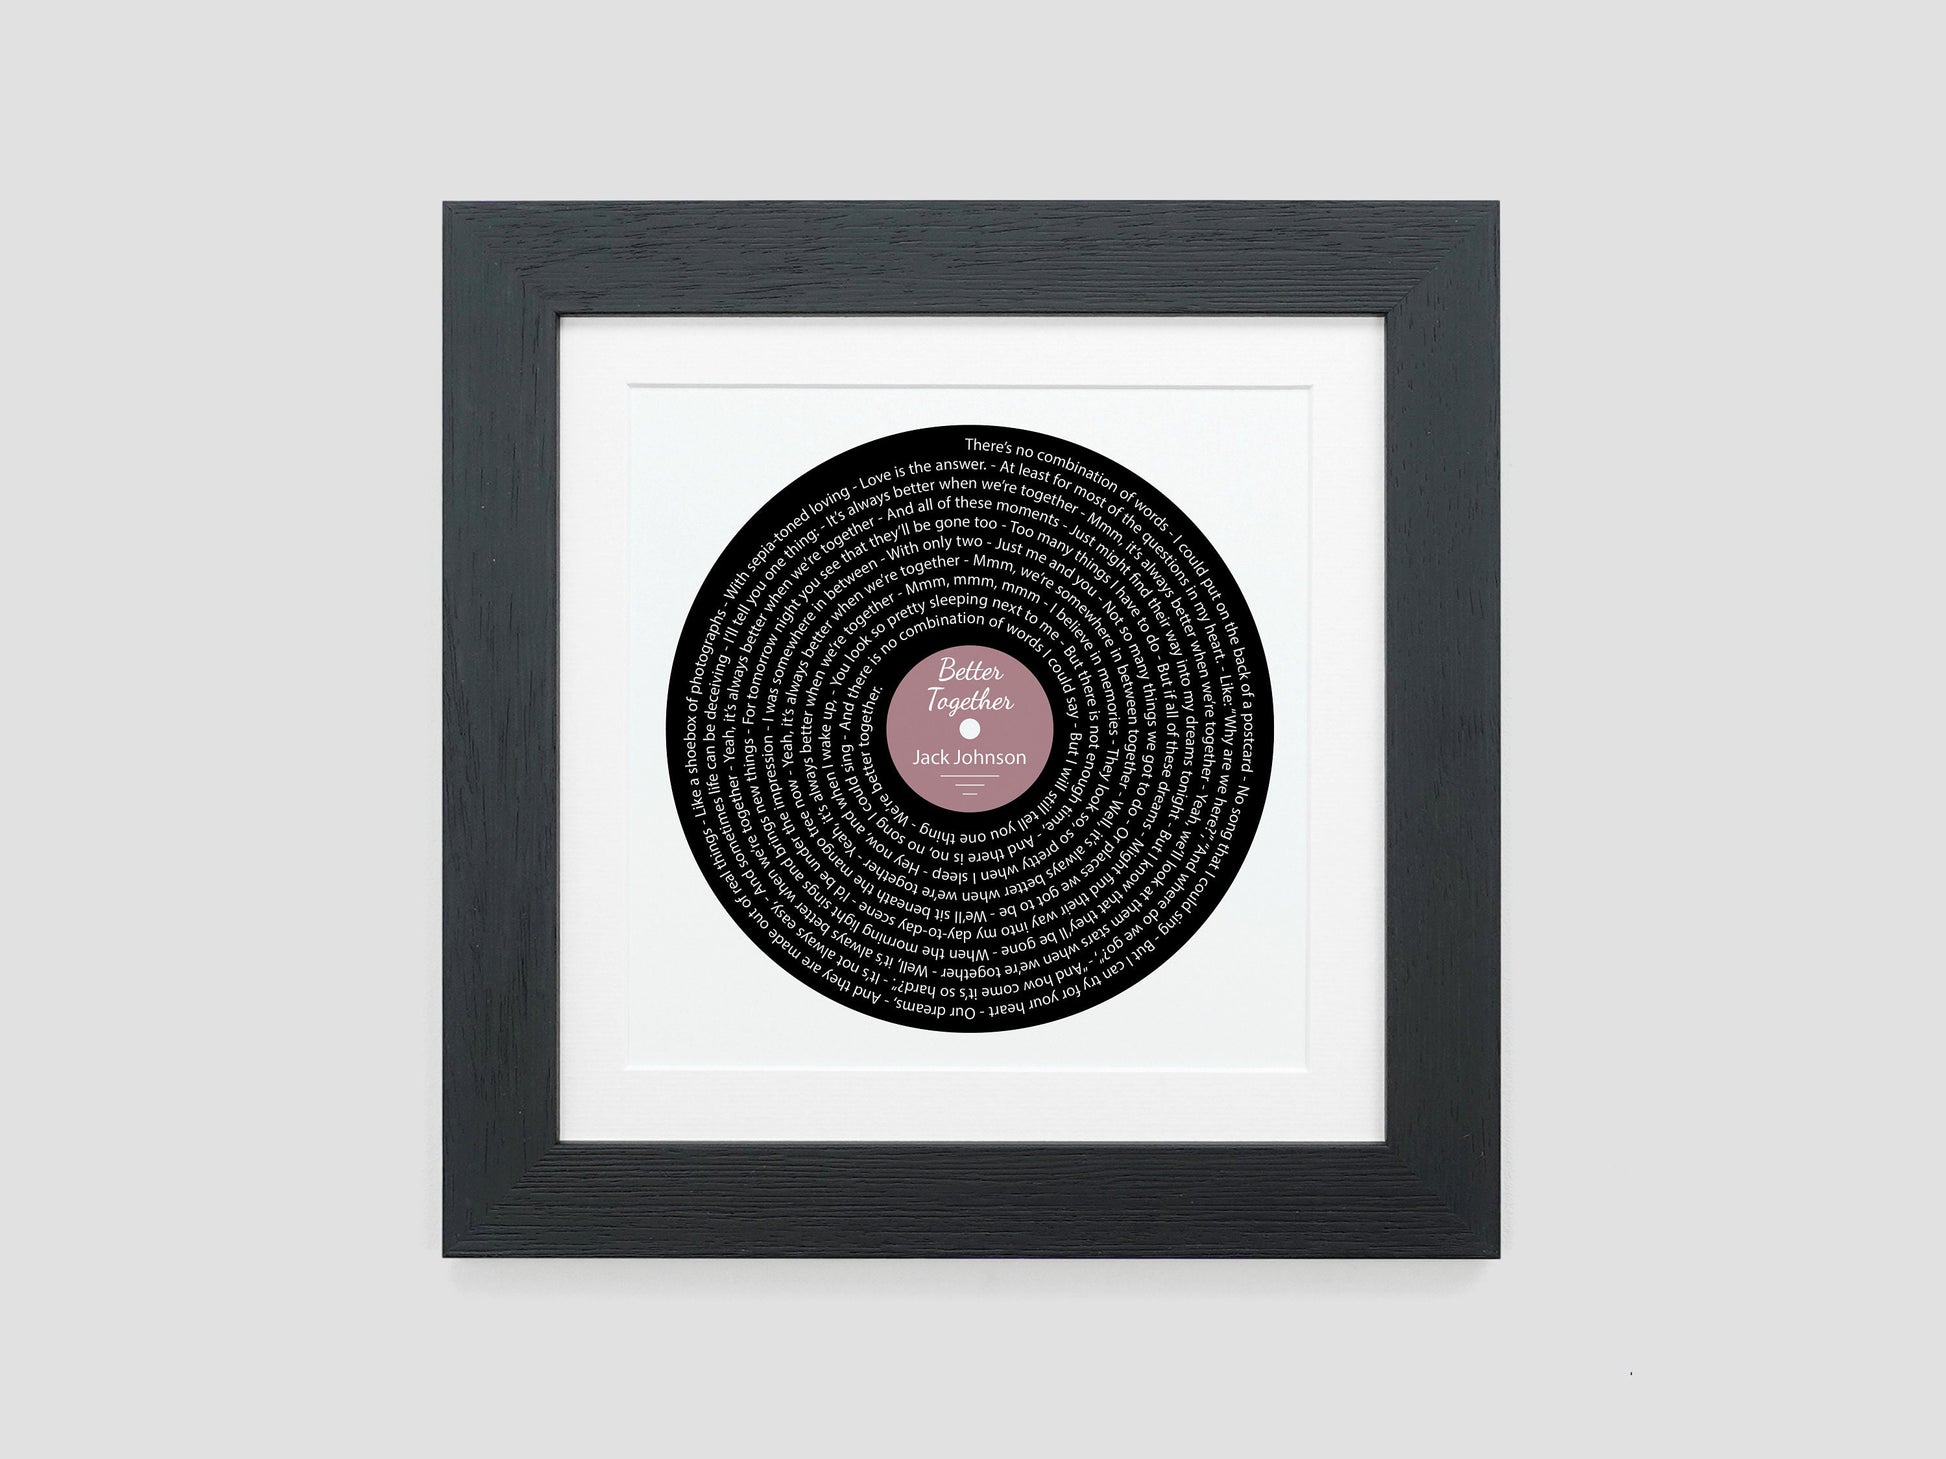 Better Together - Jack Johnson | Song lyric gift | Vinyl record print | First Dance present | Wedding gift | Anniversary present VA009